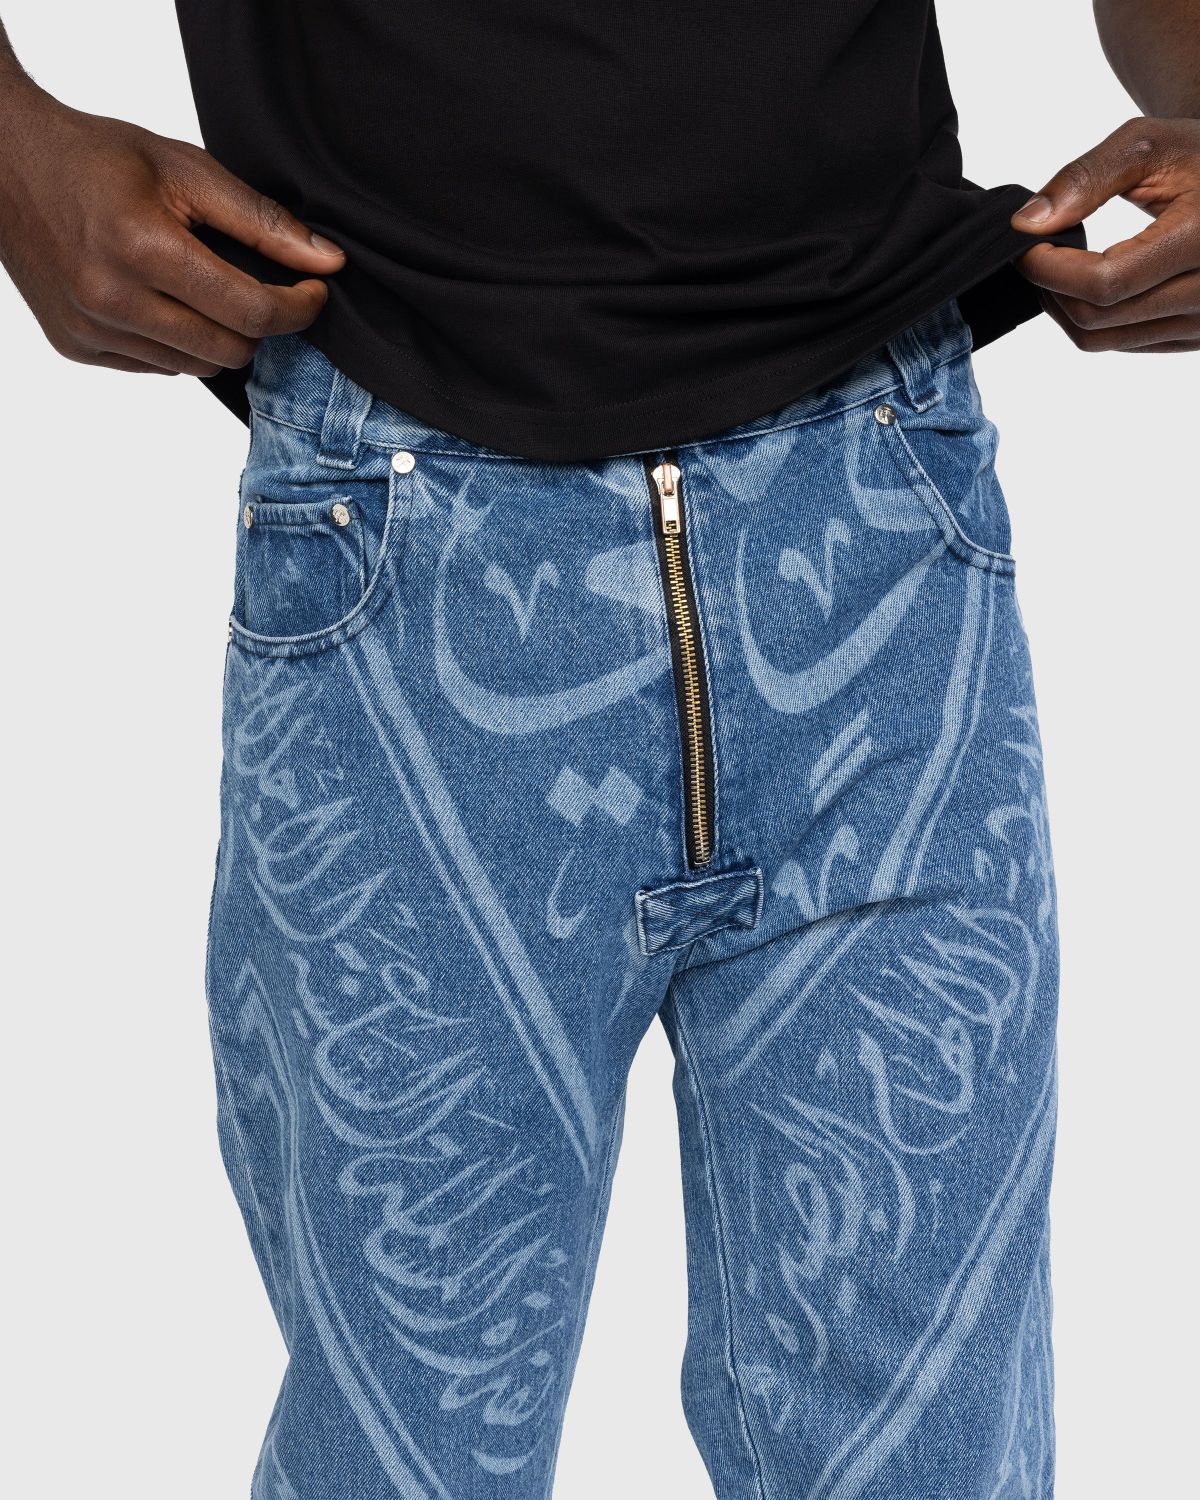 GmbH – Fatin Denim Trousers Indigo With Print - Pants - Blue - Image 4